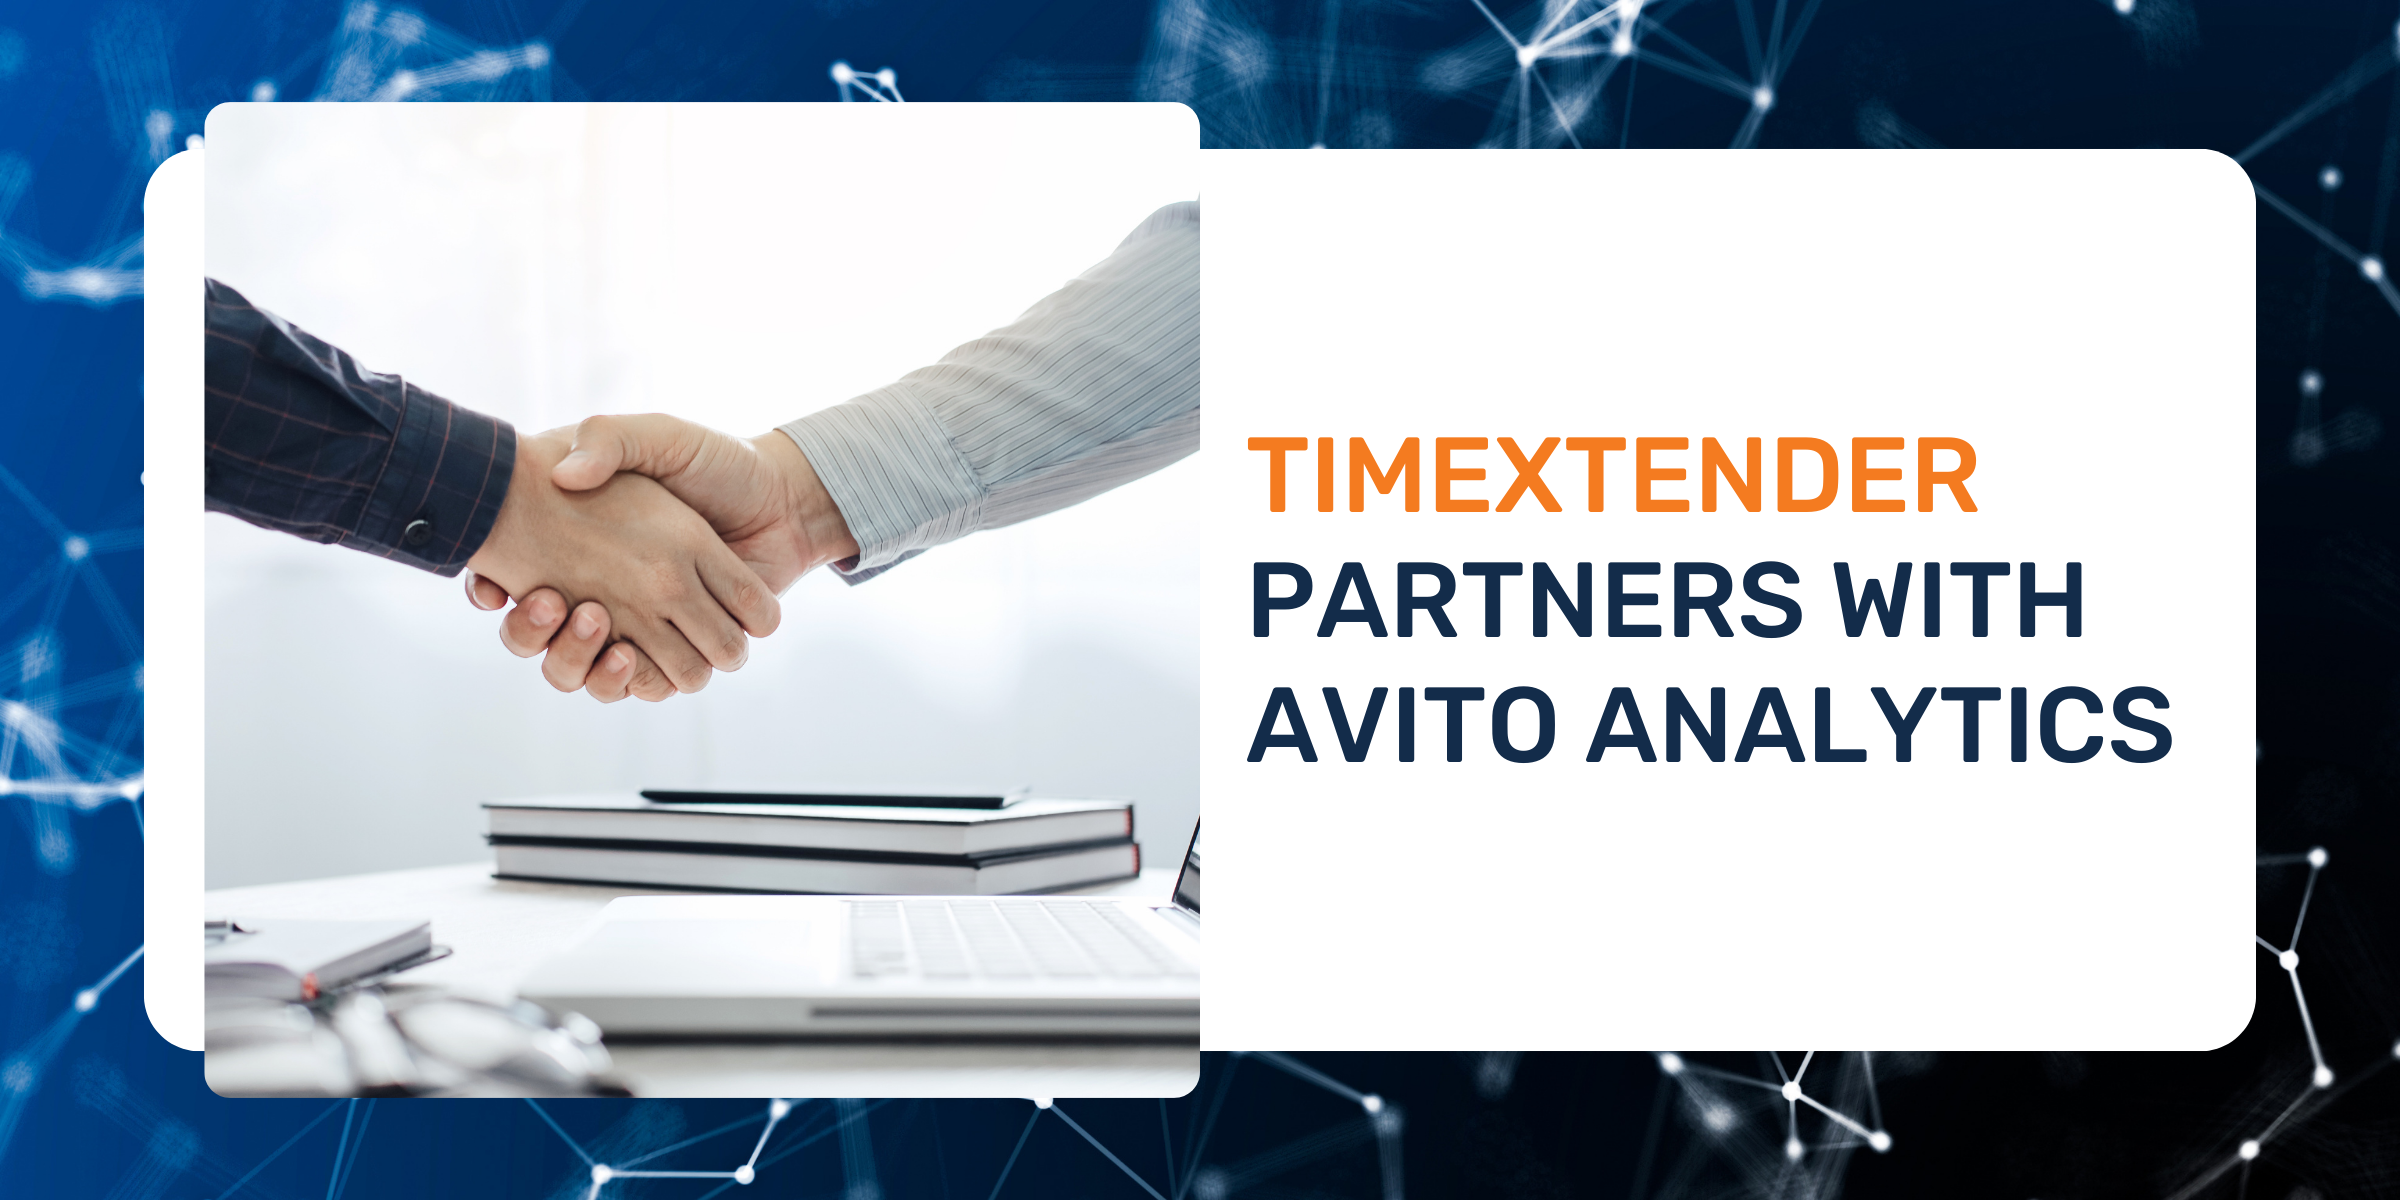 Timextender Announces Partnership with Avito Analytics